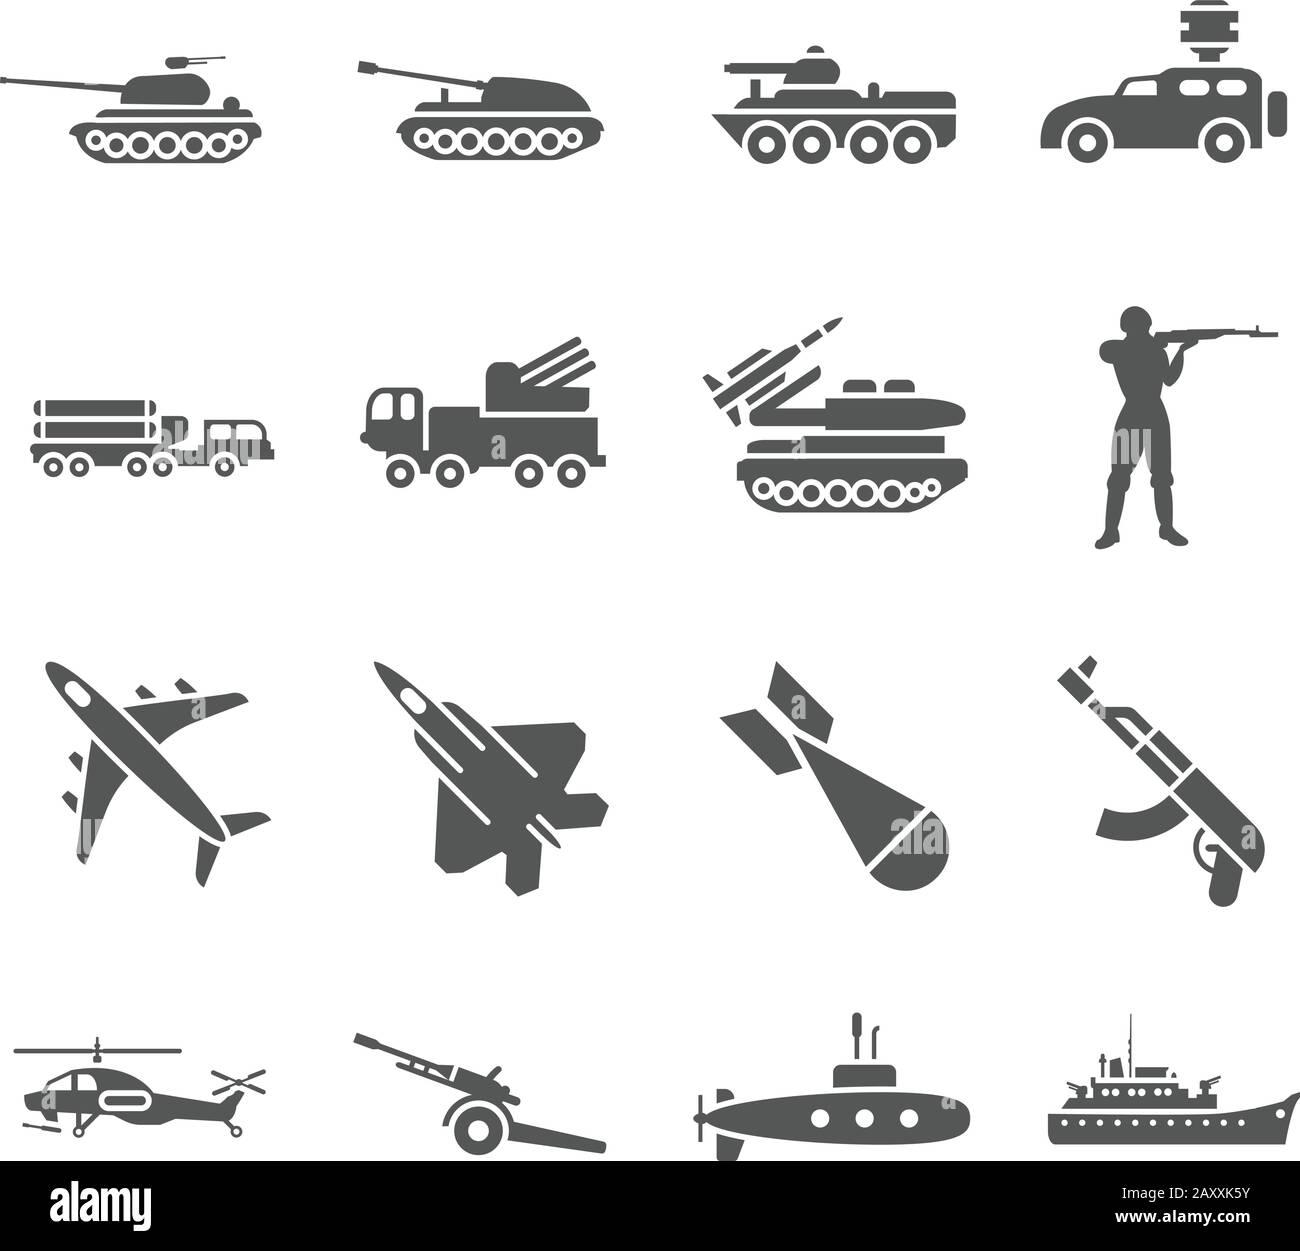 Armee, Militärvektor-Ikonen gesetzt. Militärwaffe, Militärrakete, militärische Transportillustration Stock Vektor